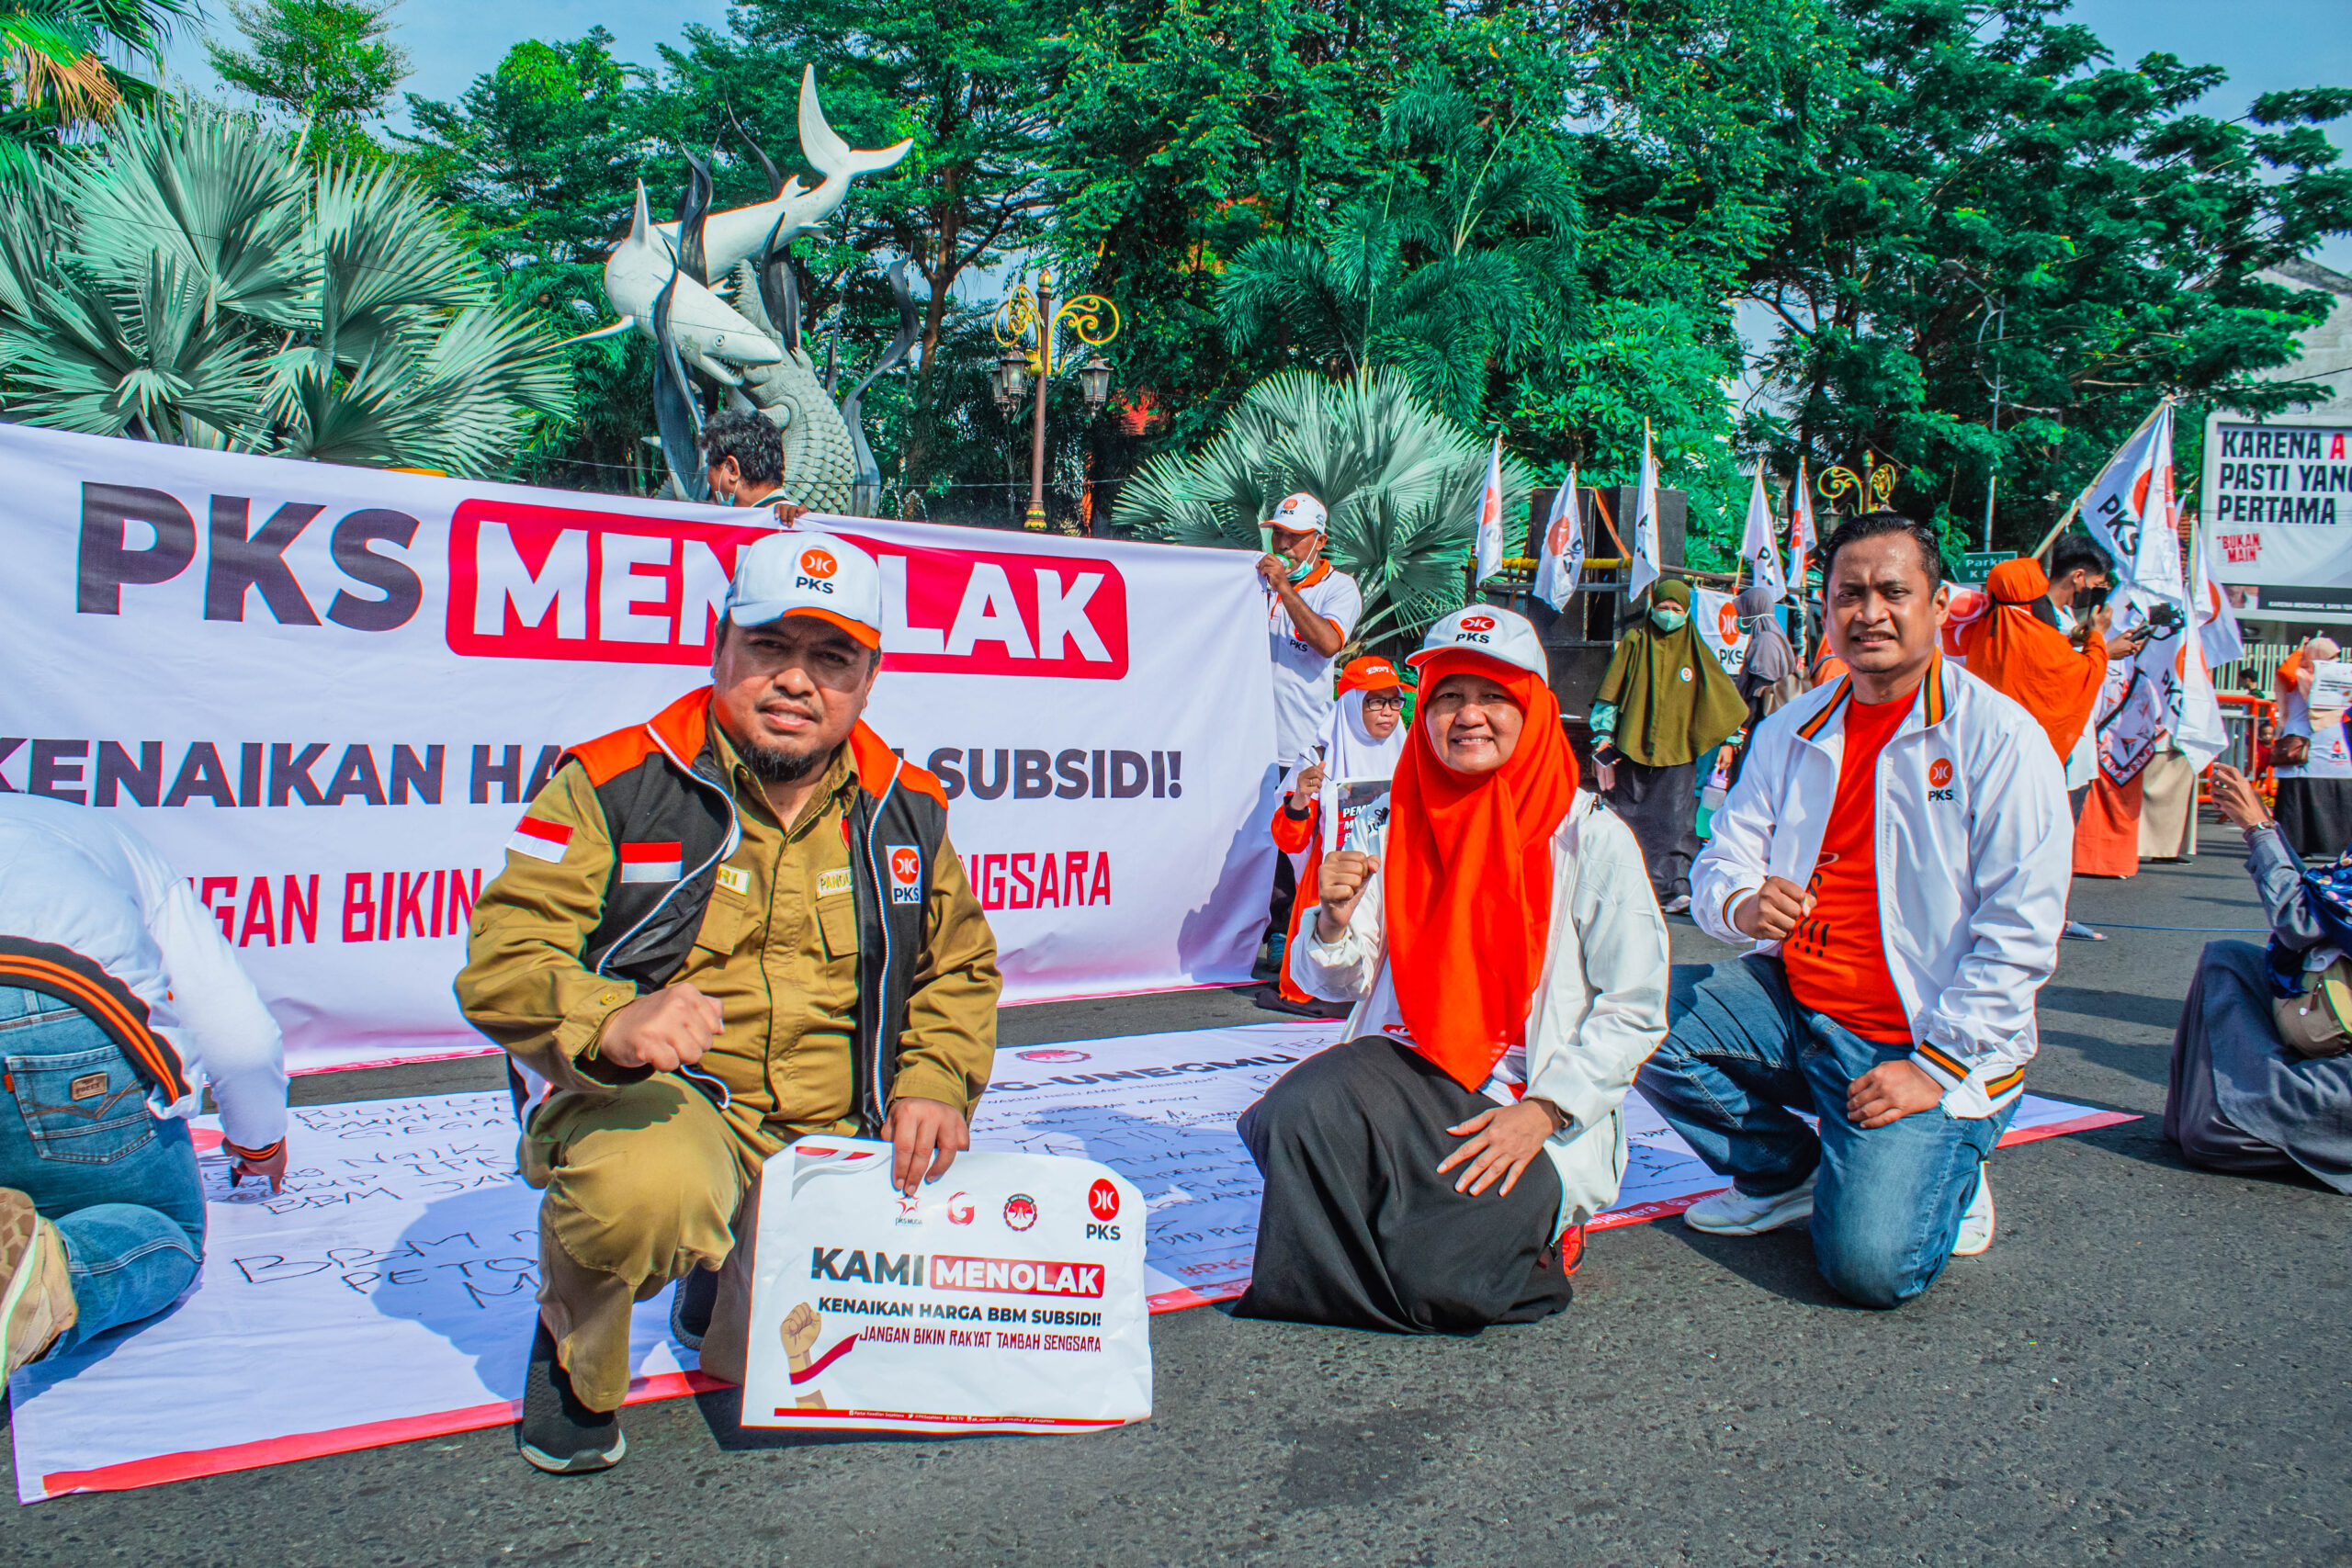 Gelar Aksi Flashmob, Legislator PKS Turun Jalan Bentangkan Poster, Reni Astuti: PKS bersama rakyat